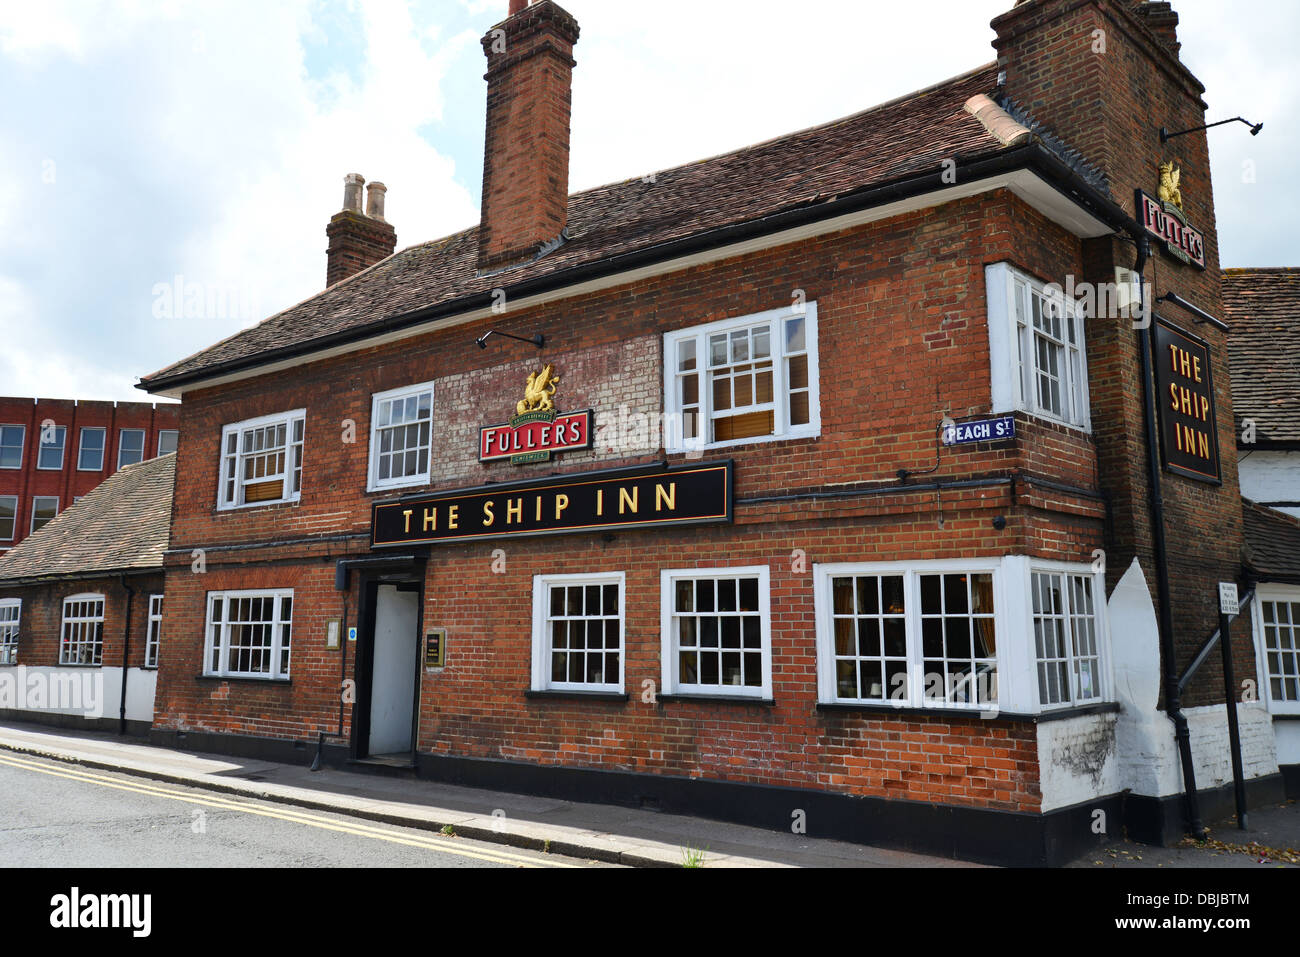 The Ship Inn, Peach Street, Wokingham, Berkshire, England, United Kingdom Stock Photo